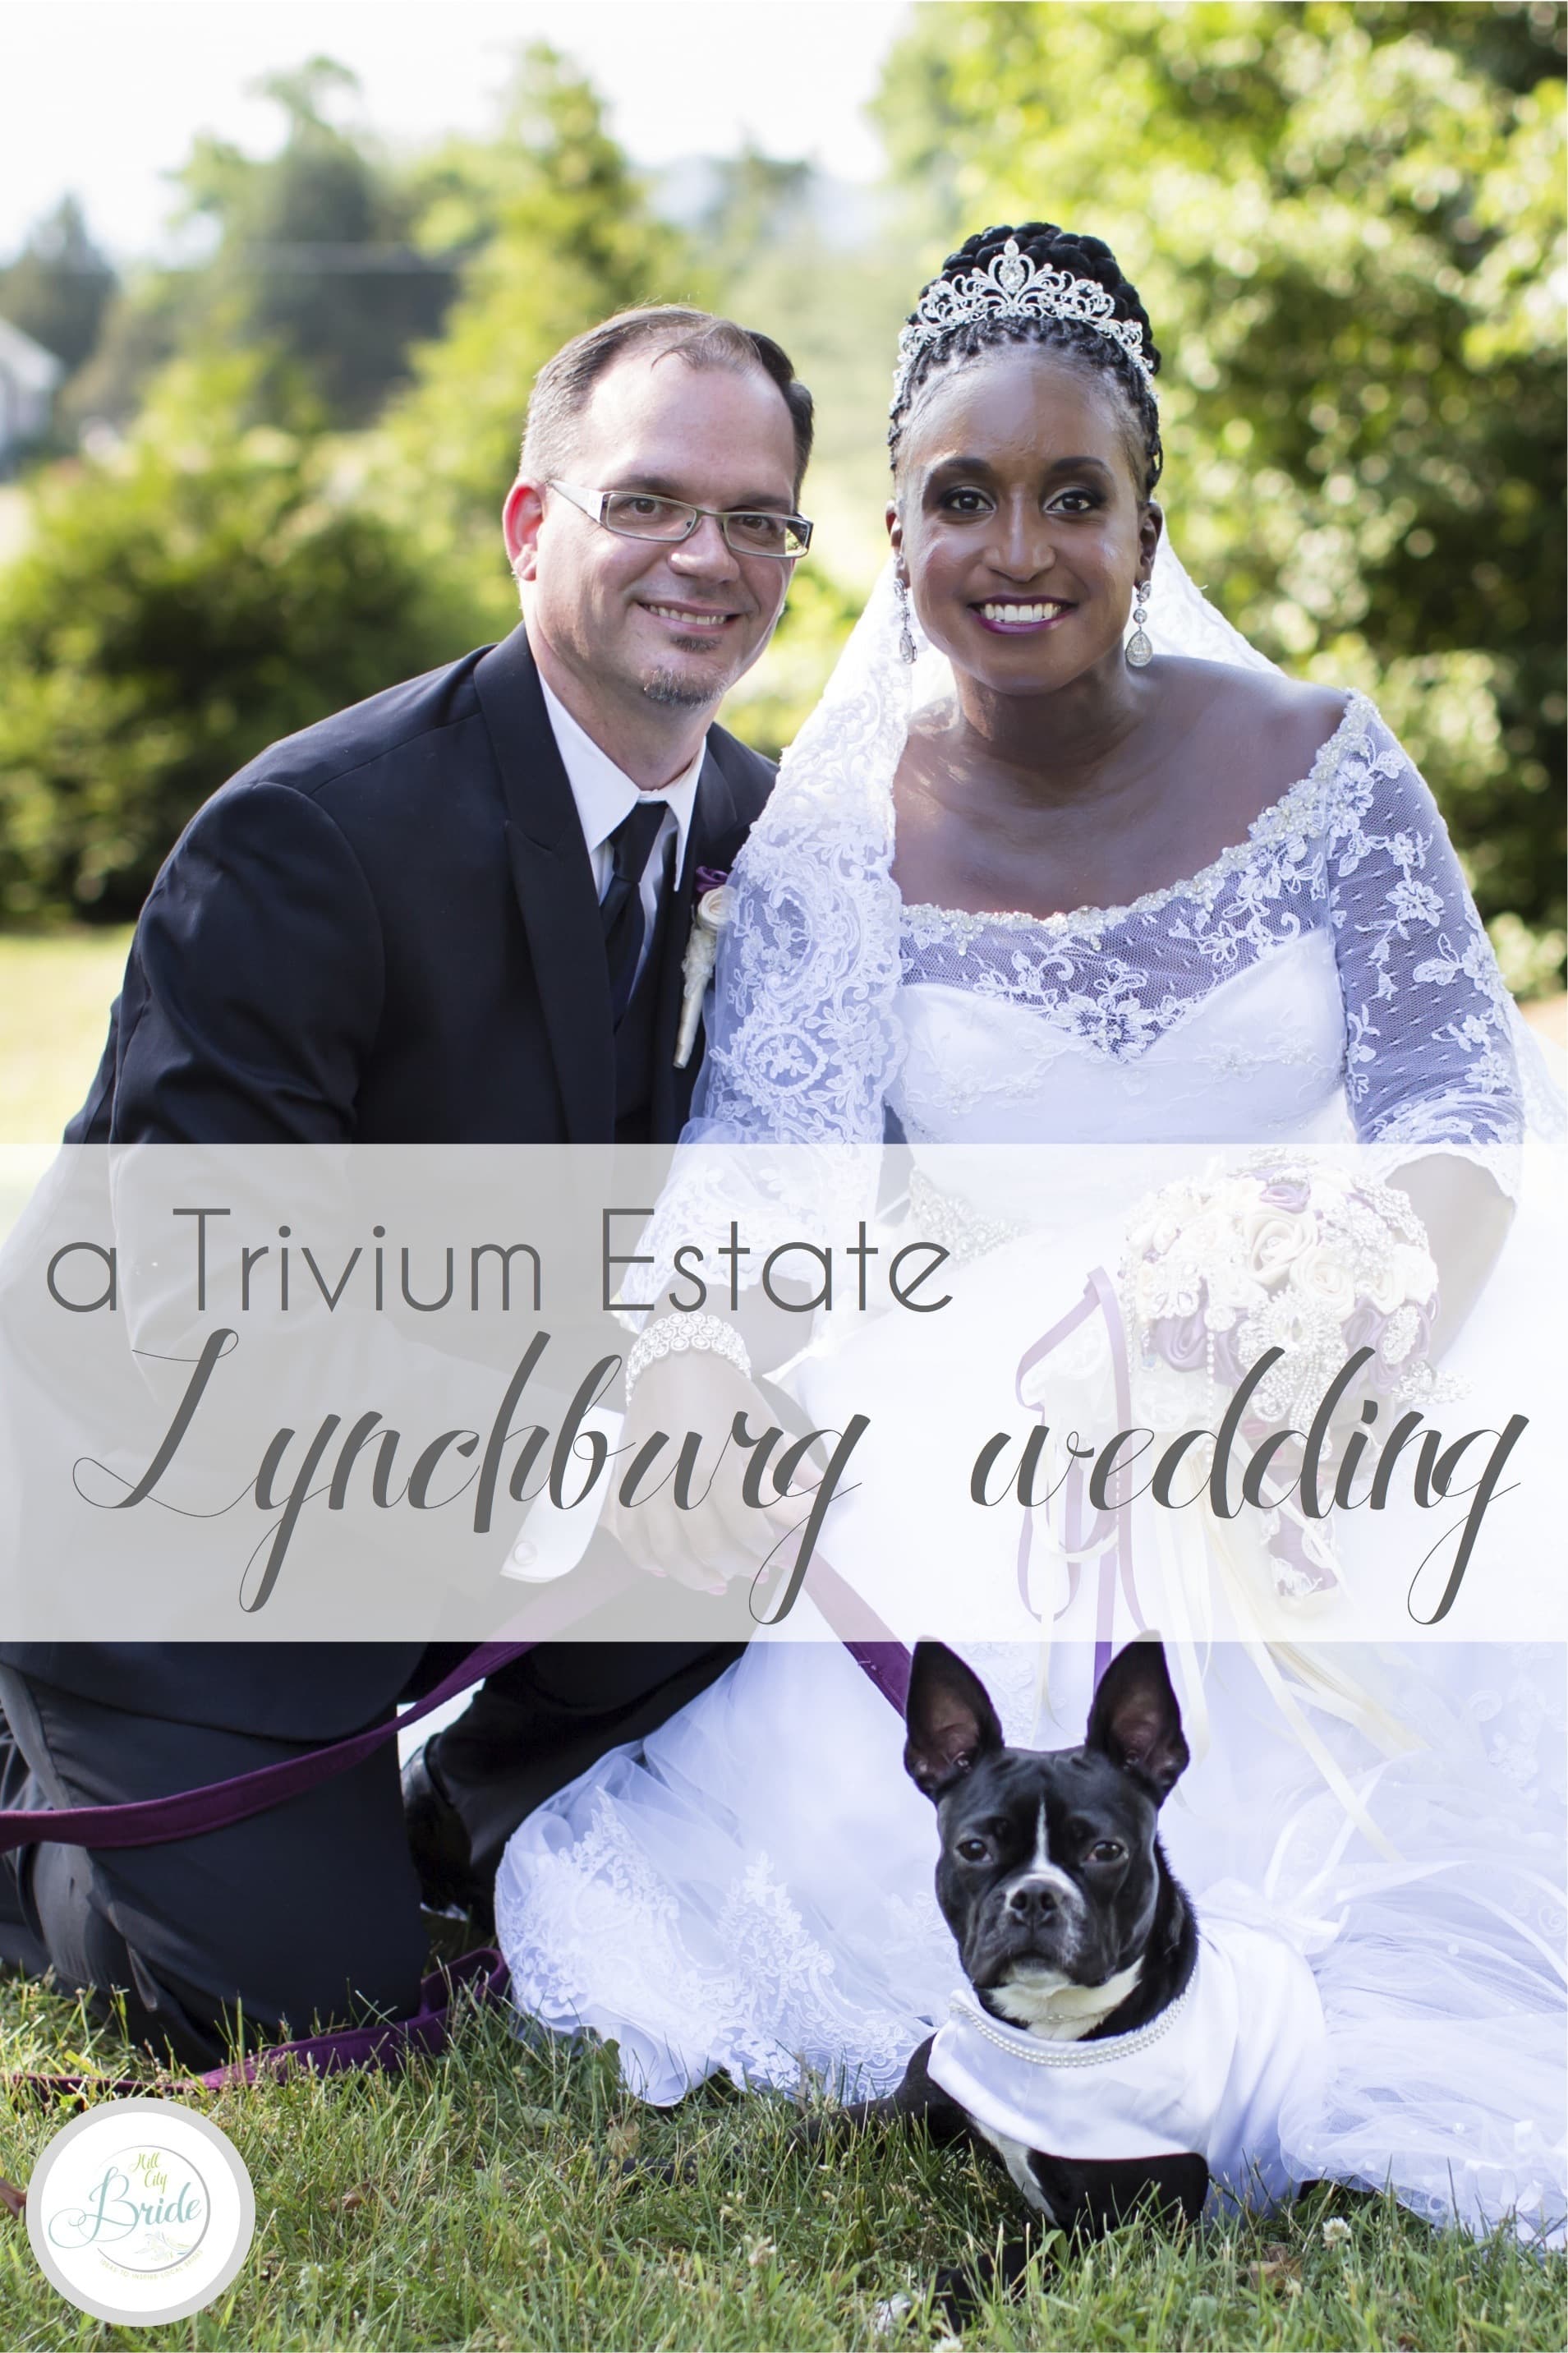 Trivium Estate Lynchburg Virginia Wedding Interracial with Dog as seen on Hill City Bride Blog and Magazine